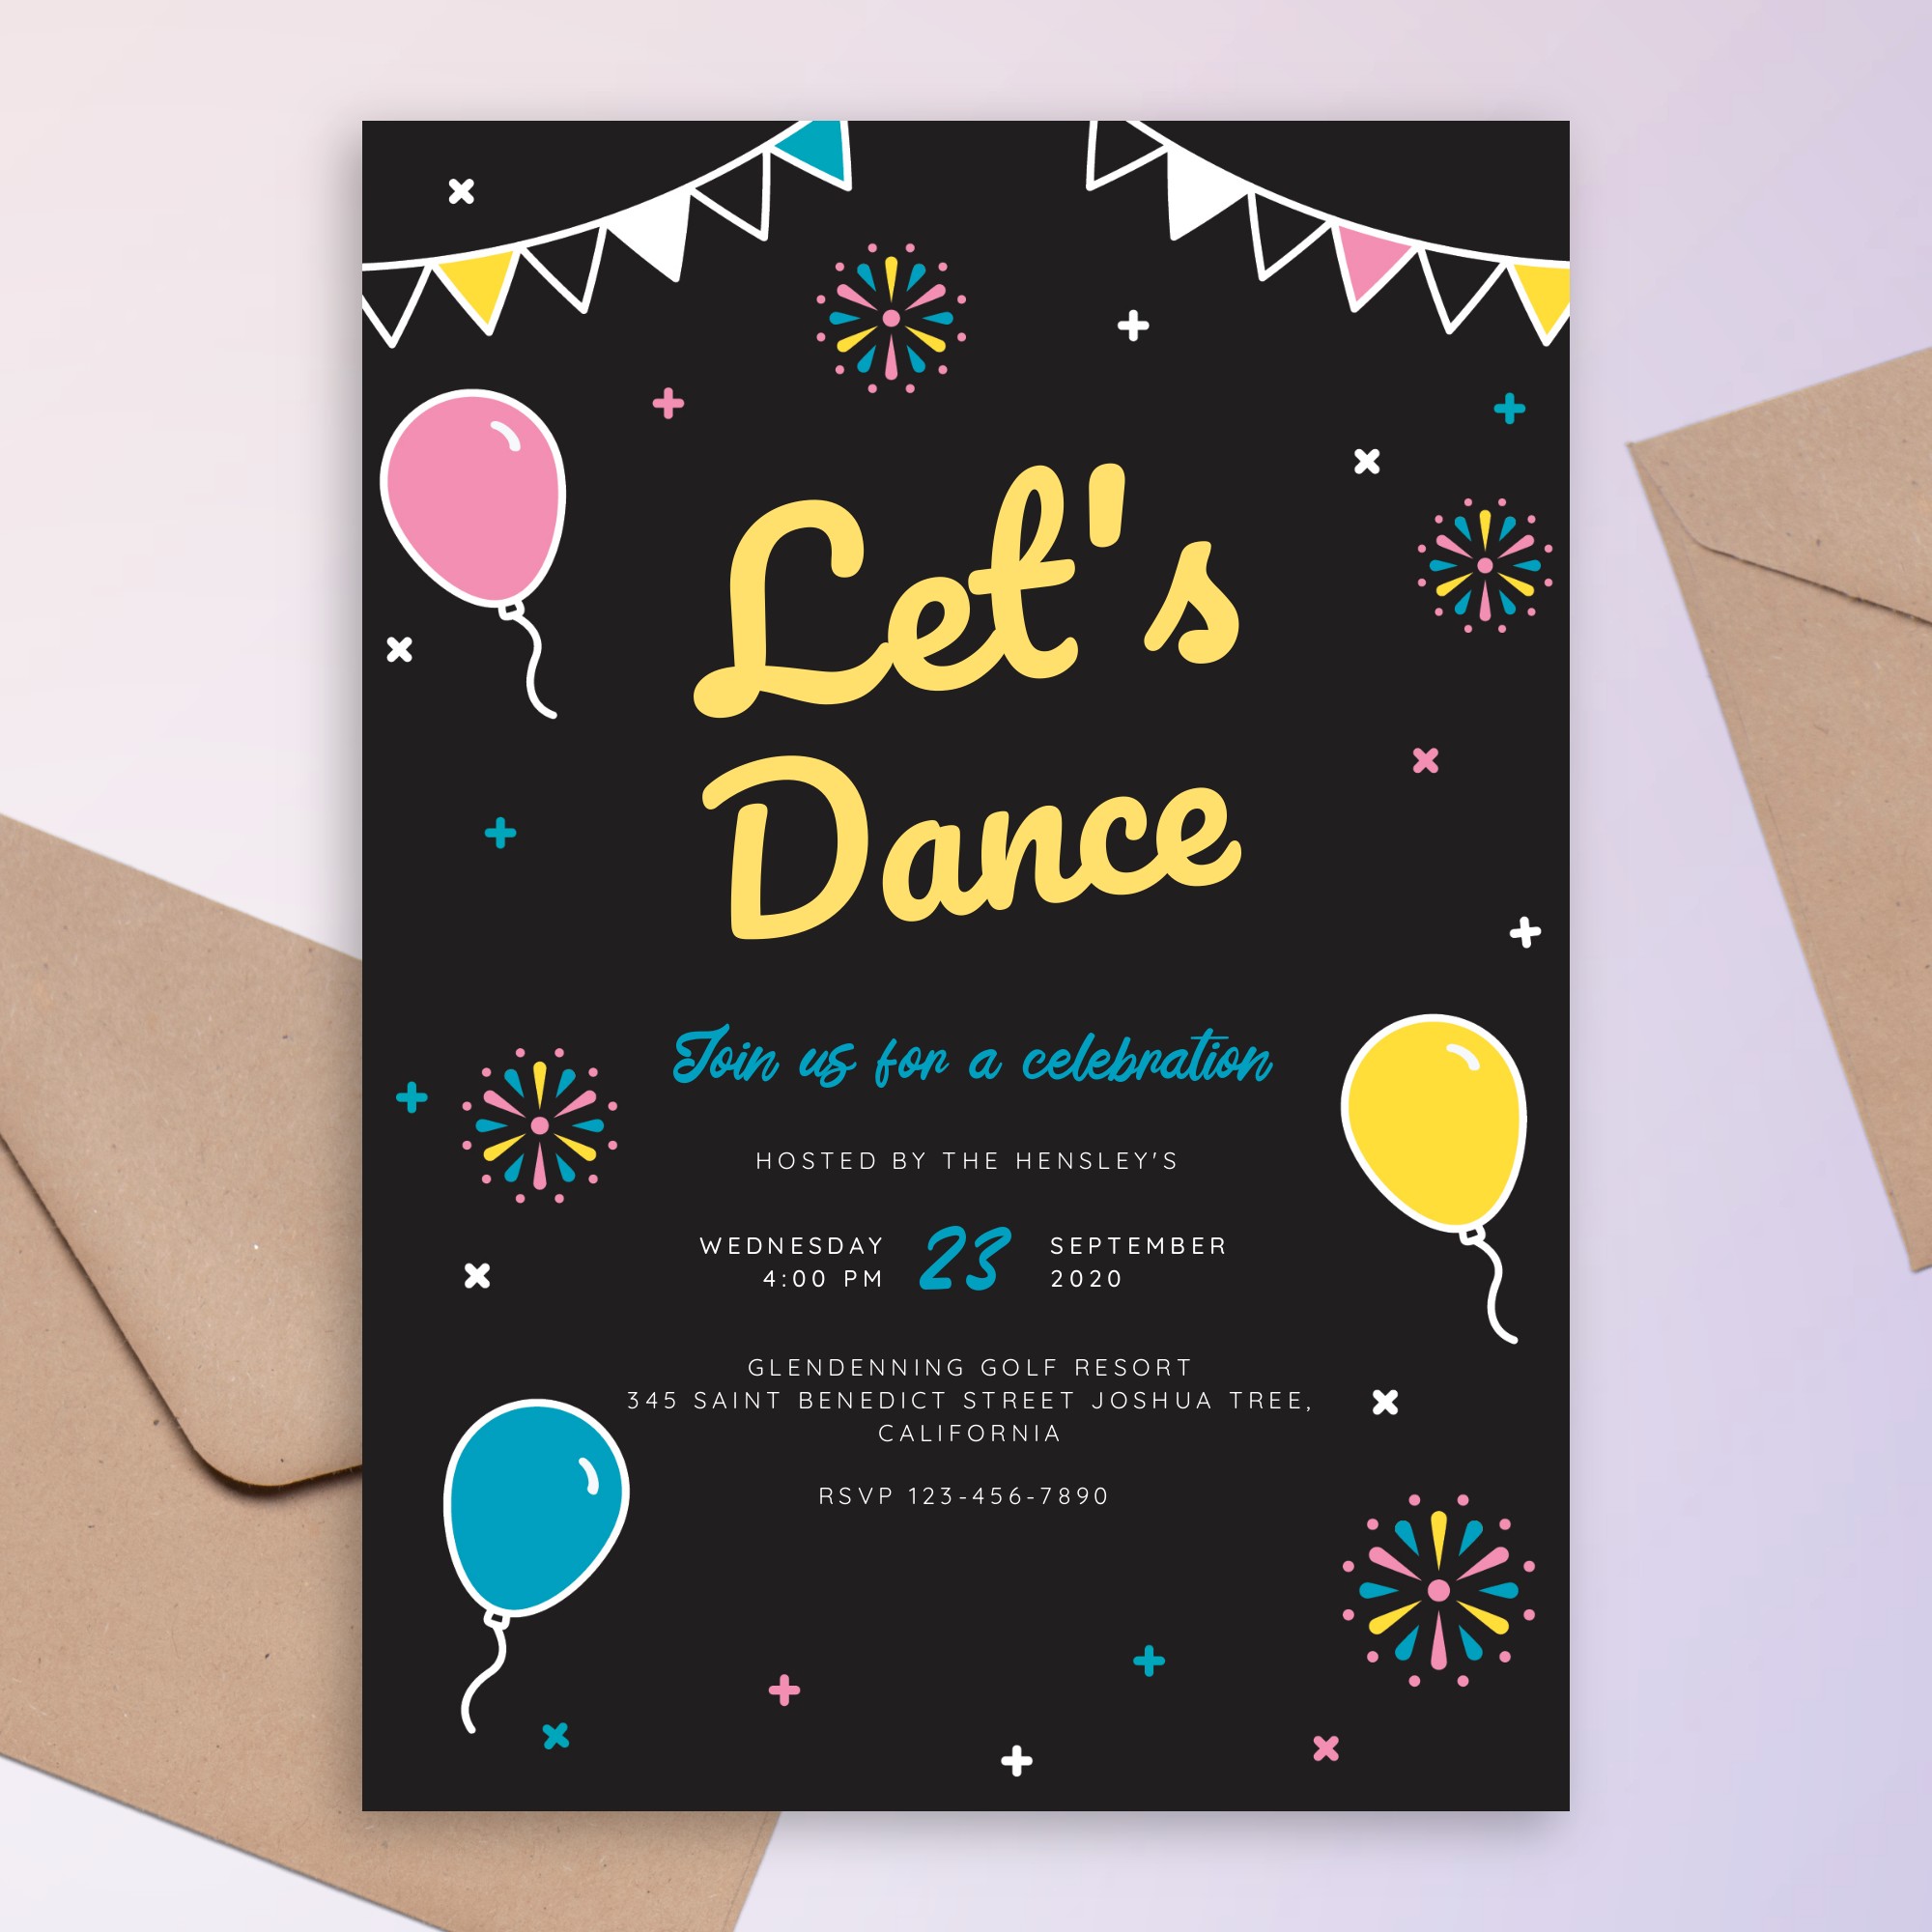 Dance Party Invitation Template